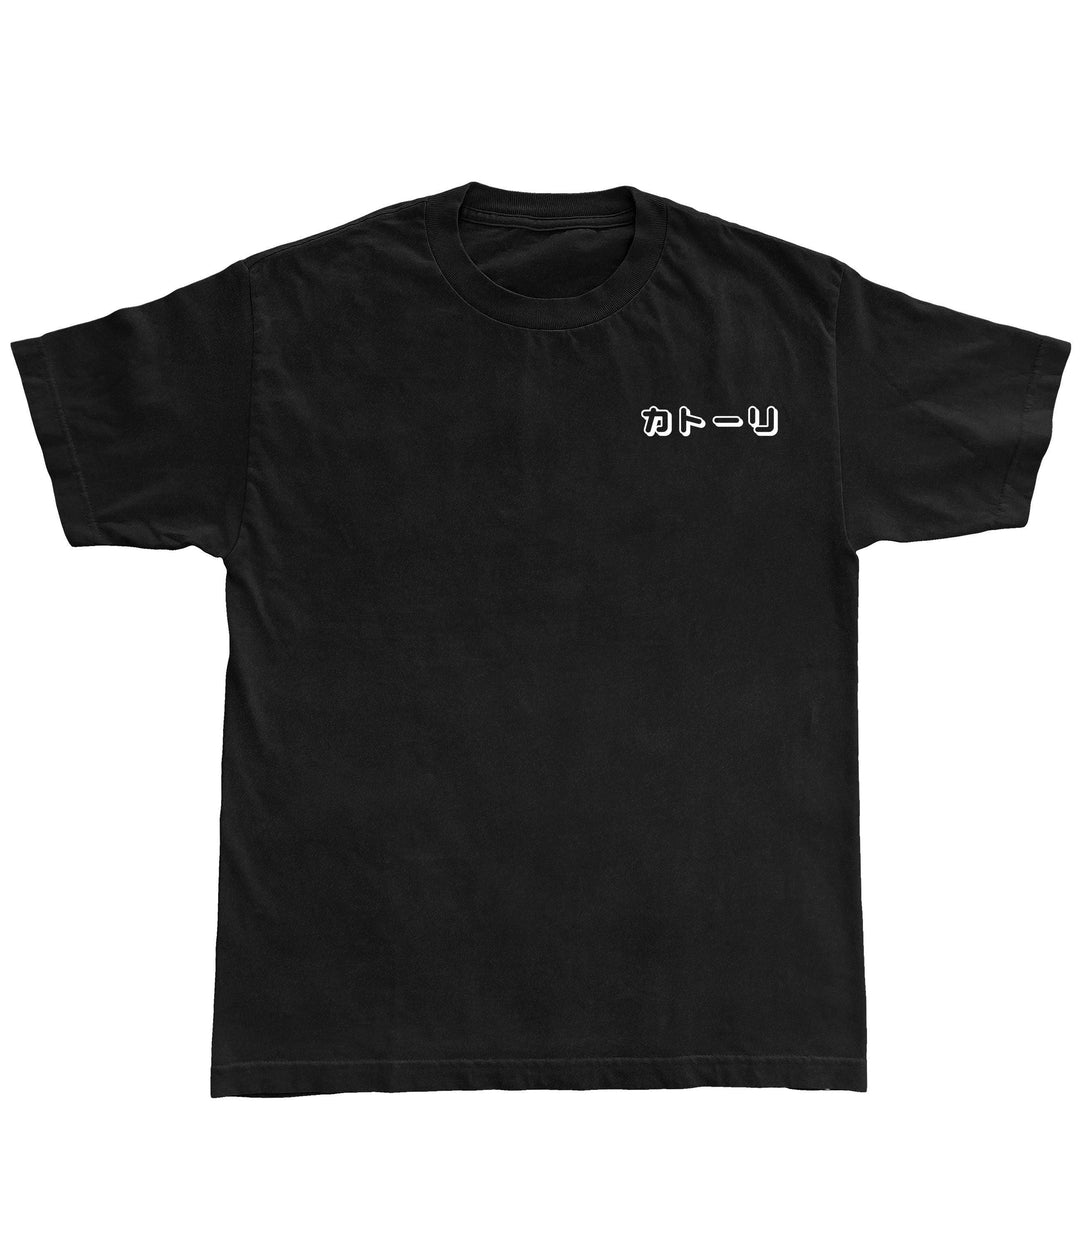 Oni T-Shirt at Catori Clothing | Graphic & Anime Tees, Hoodies & Sweatshirts 